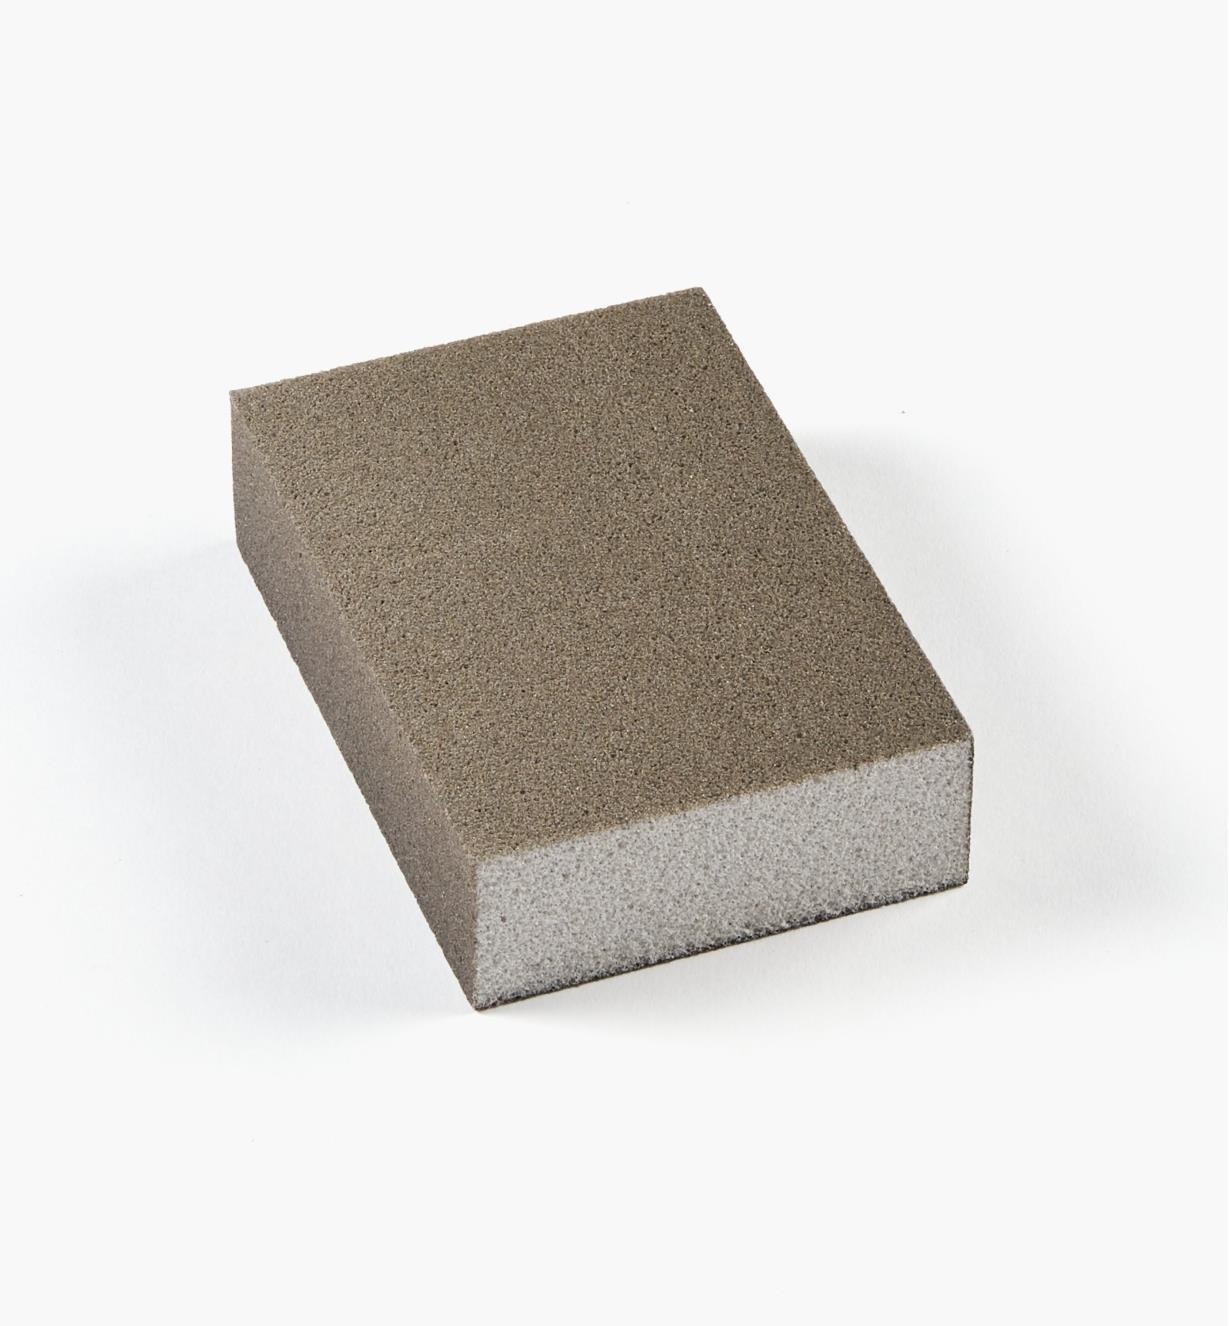 08K0444 - 220x Four-Sided Abrasive Sponge, ea.